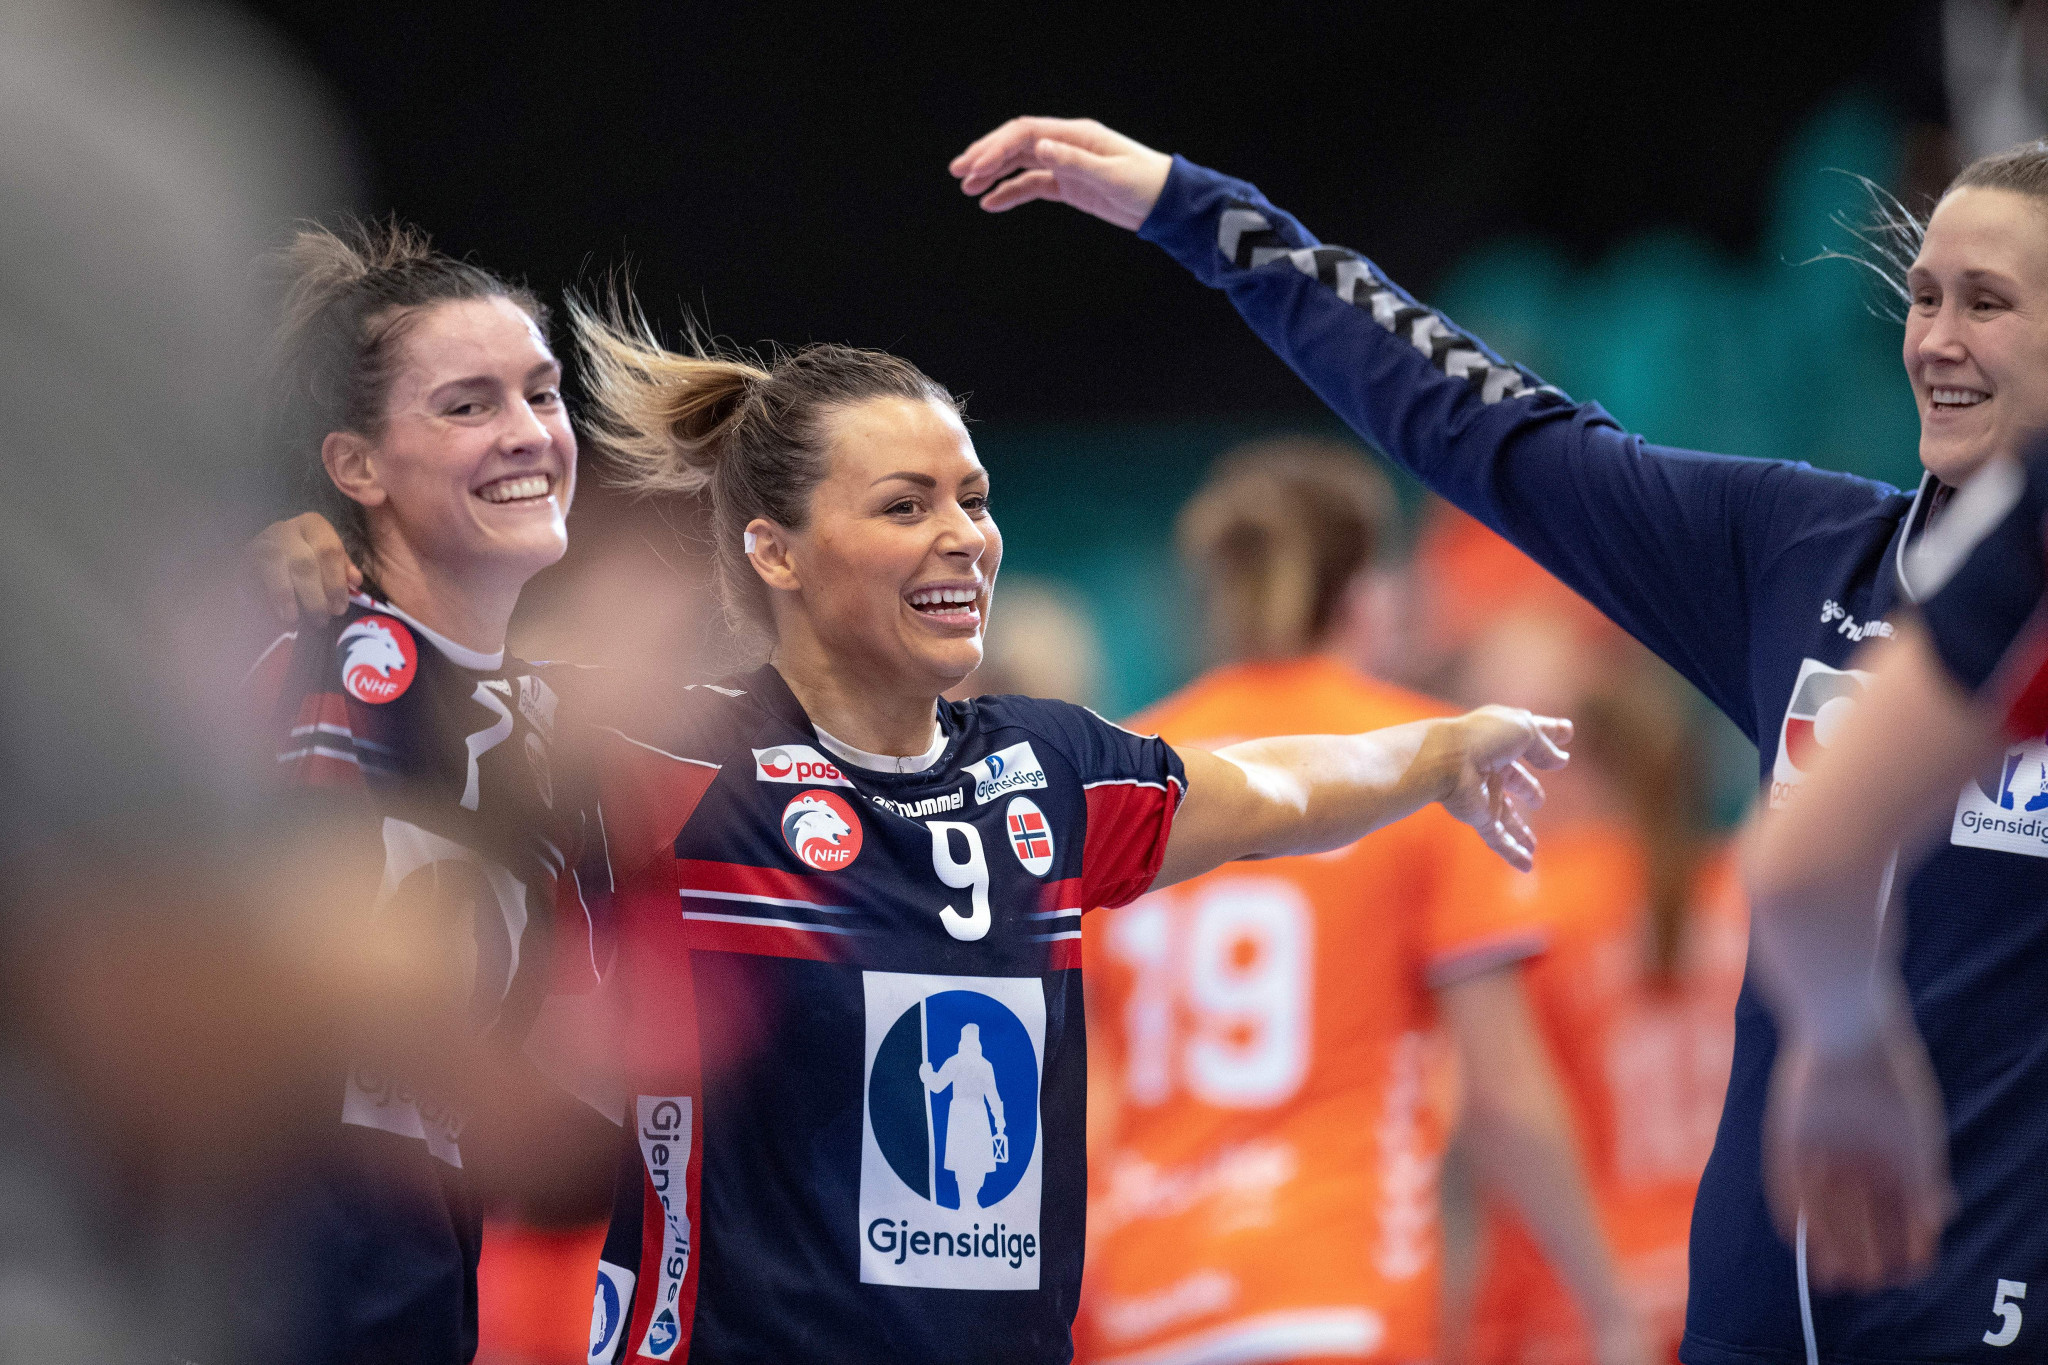 Nora Mørk has scored a tournament-leading 30 goals ©Getty Images